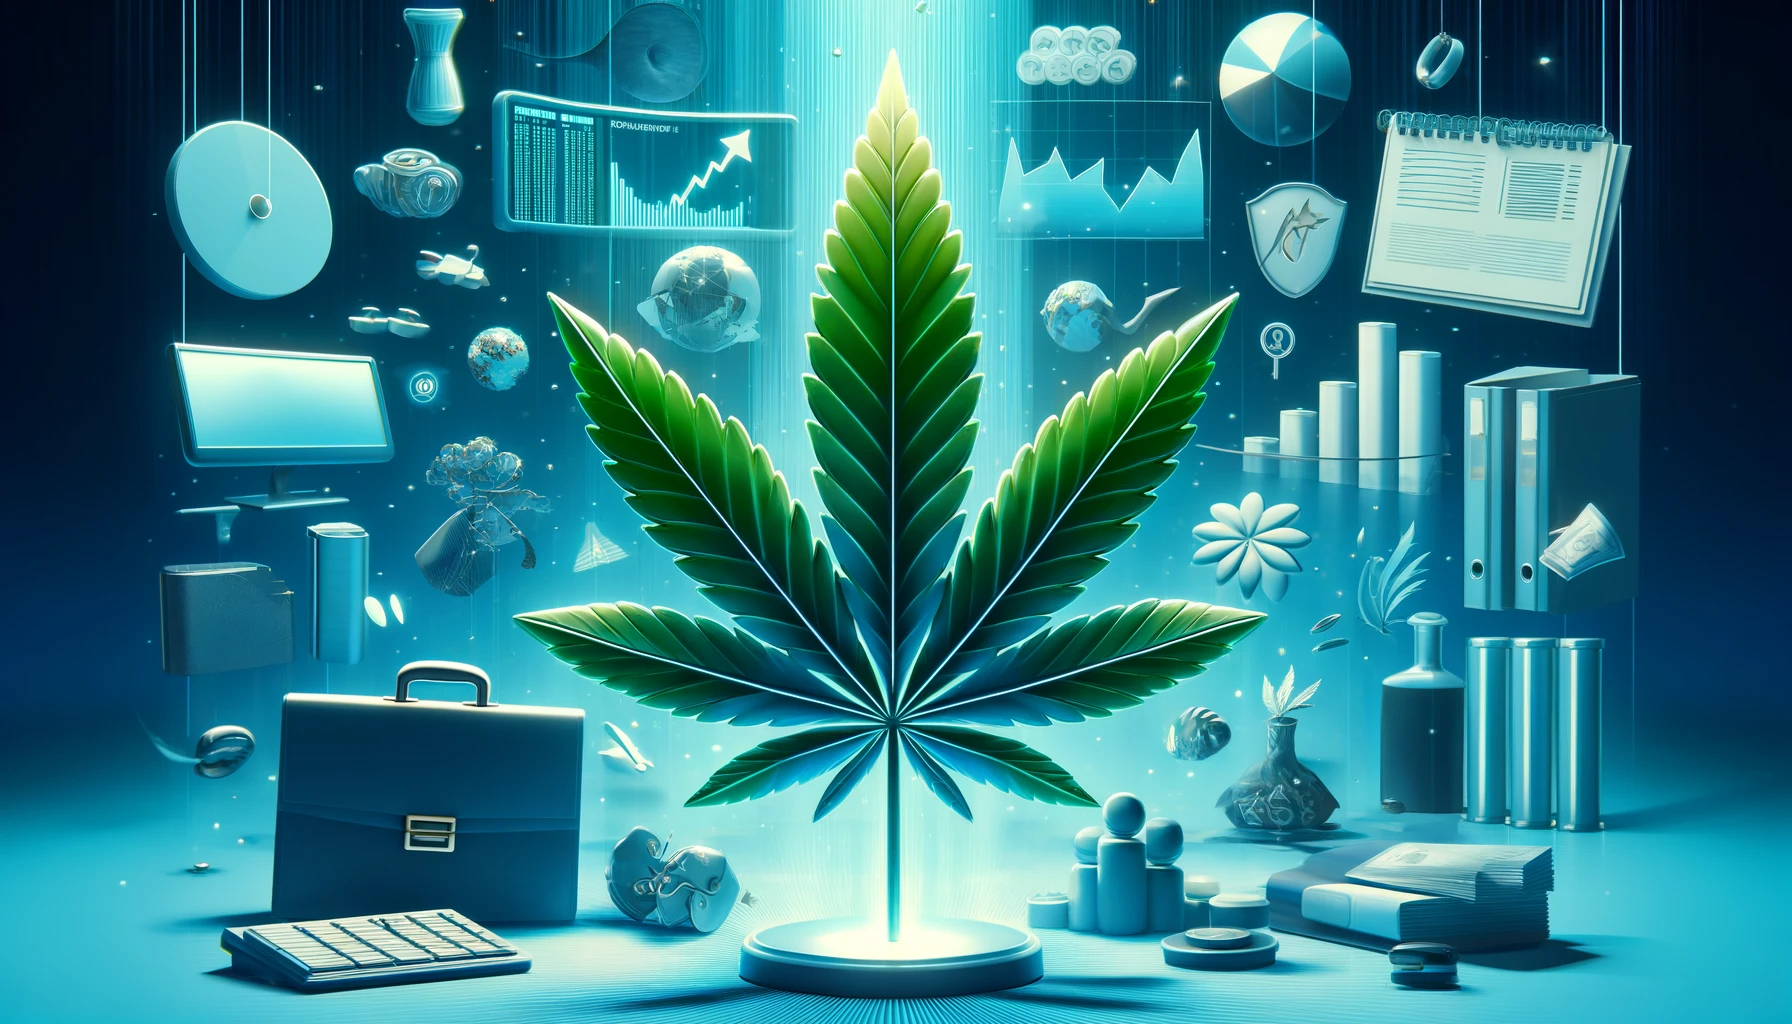 Cannabis business dismissal